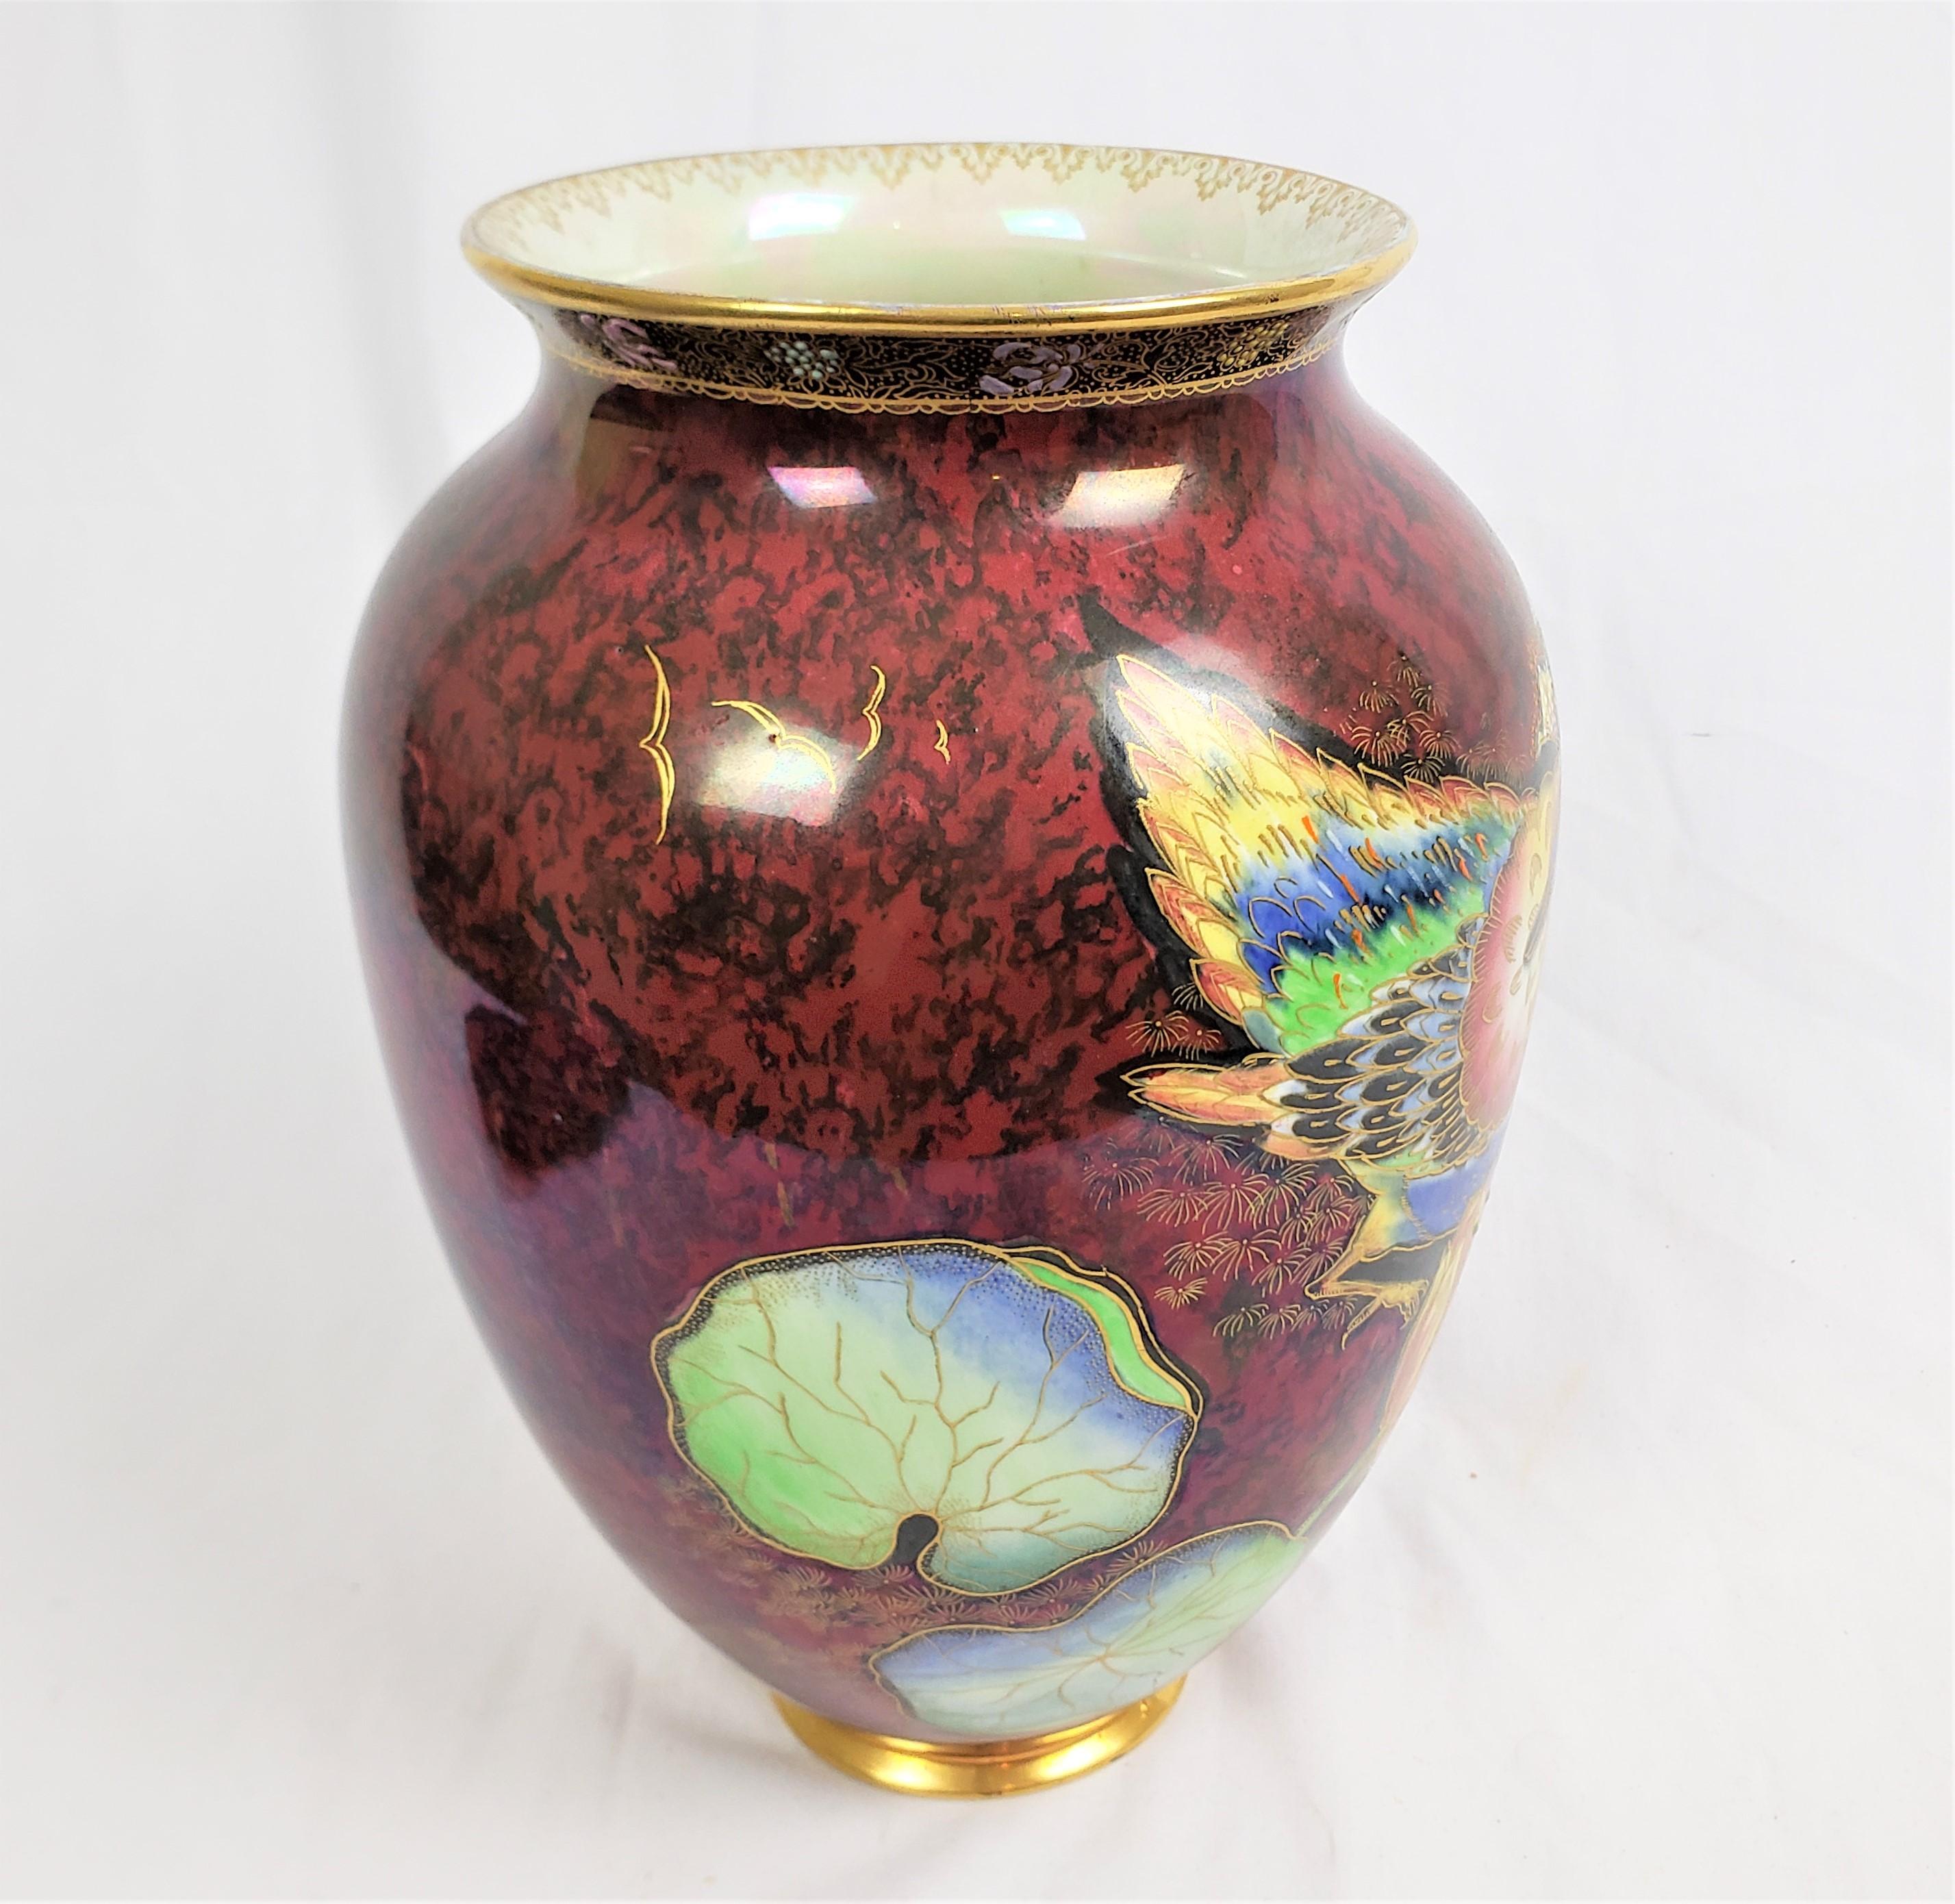 Glazed Antique Art Deco Era Carlton Ware Vase with Asian Inspired Decoration